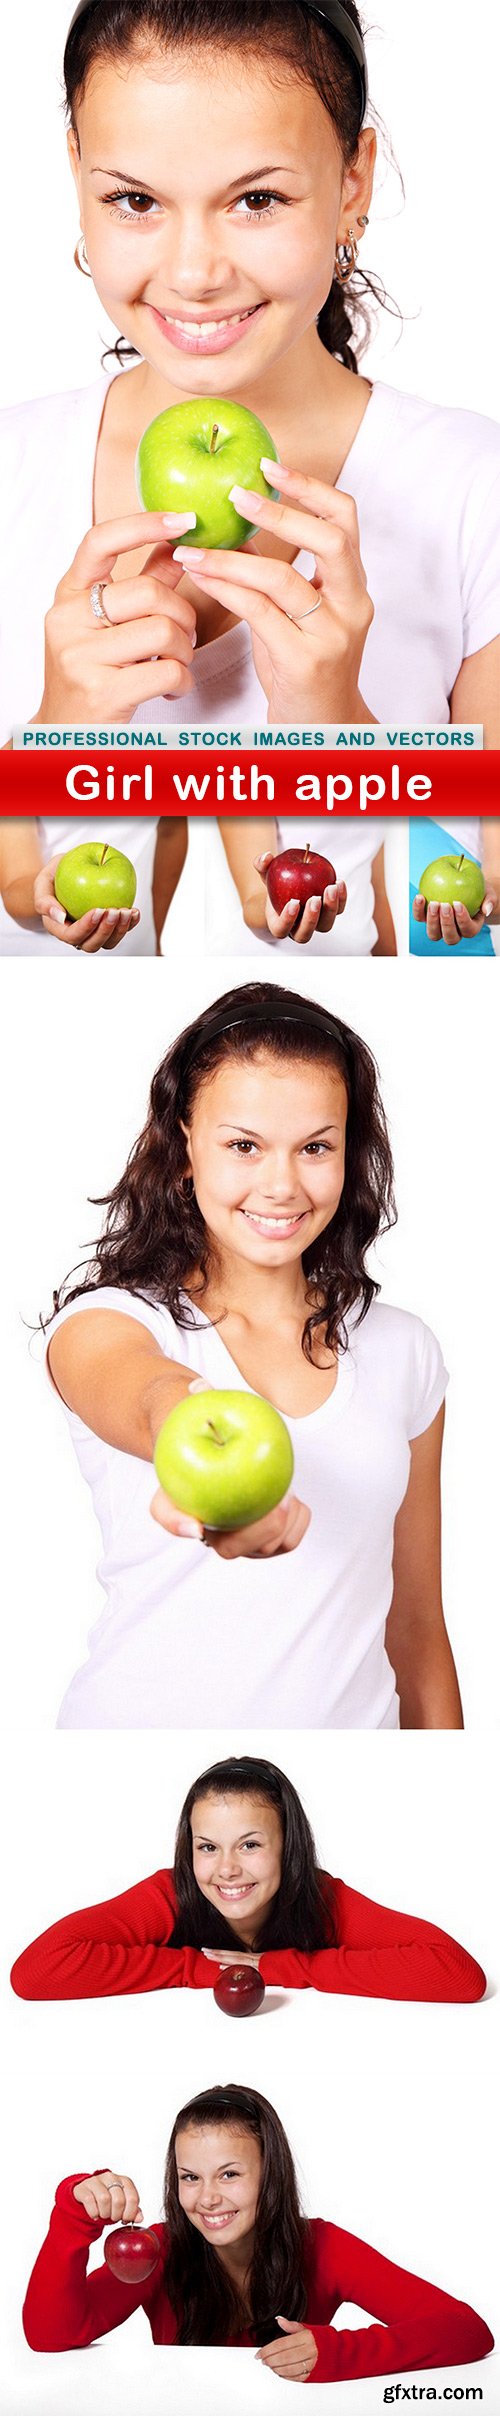 Girl with apple - 7 UHQ JPEG